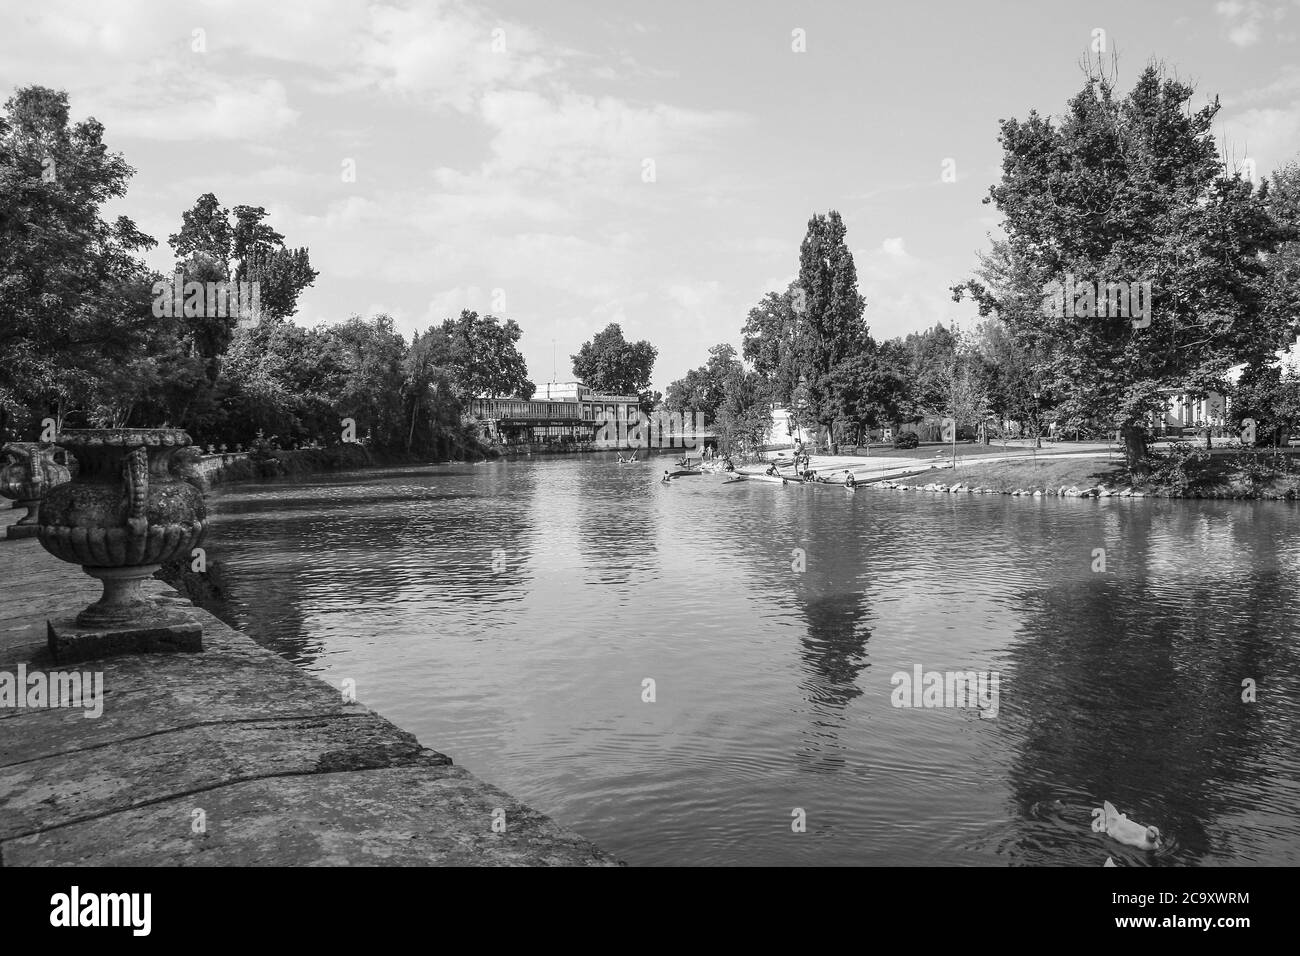 Aranjuez, Comunidad de Madrid, Spain, Europe. The Prince's Garden (Jardìn del Principe), Tagus (Tajo) river. Stock Photo